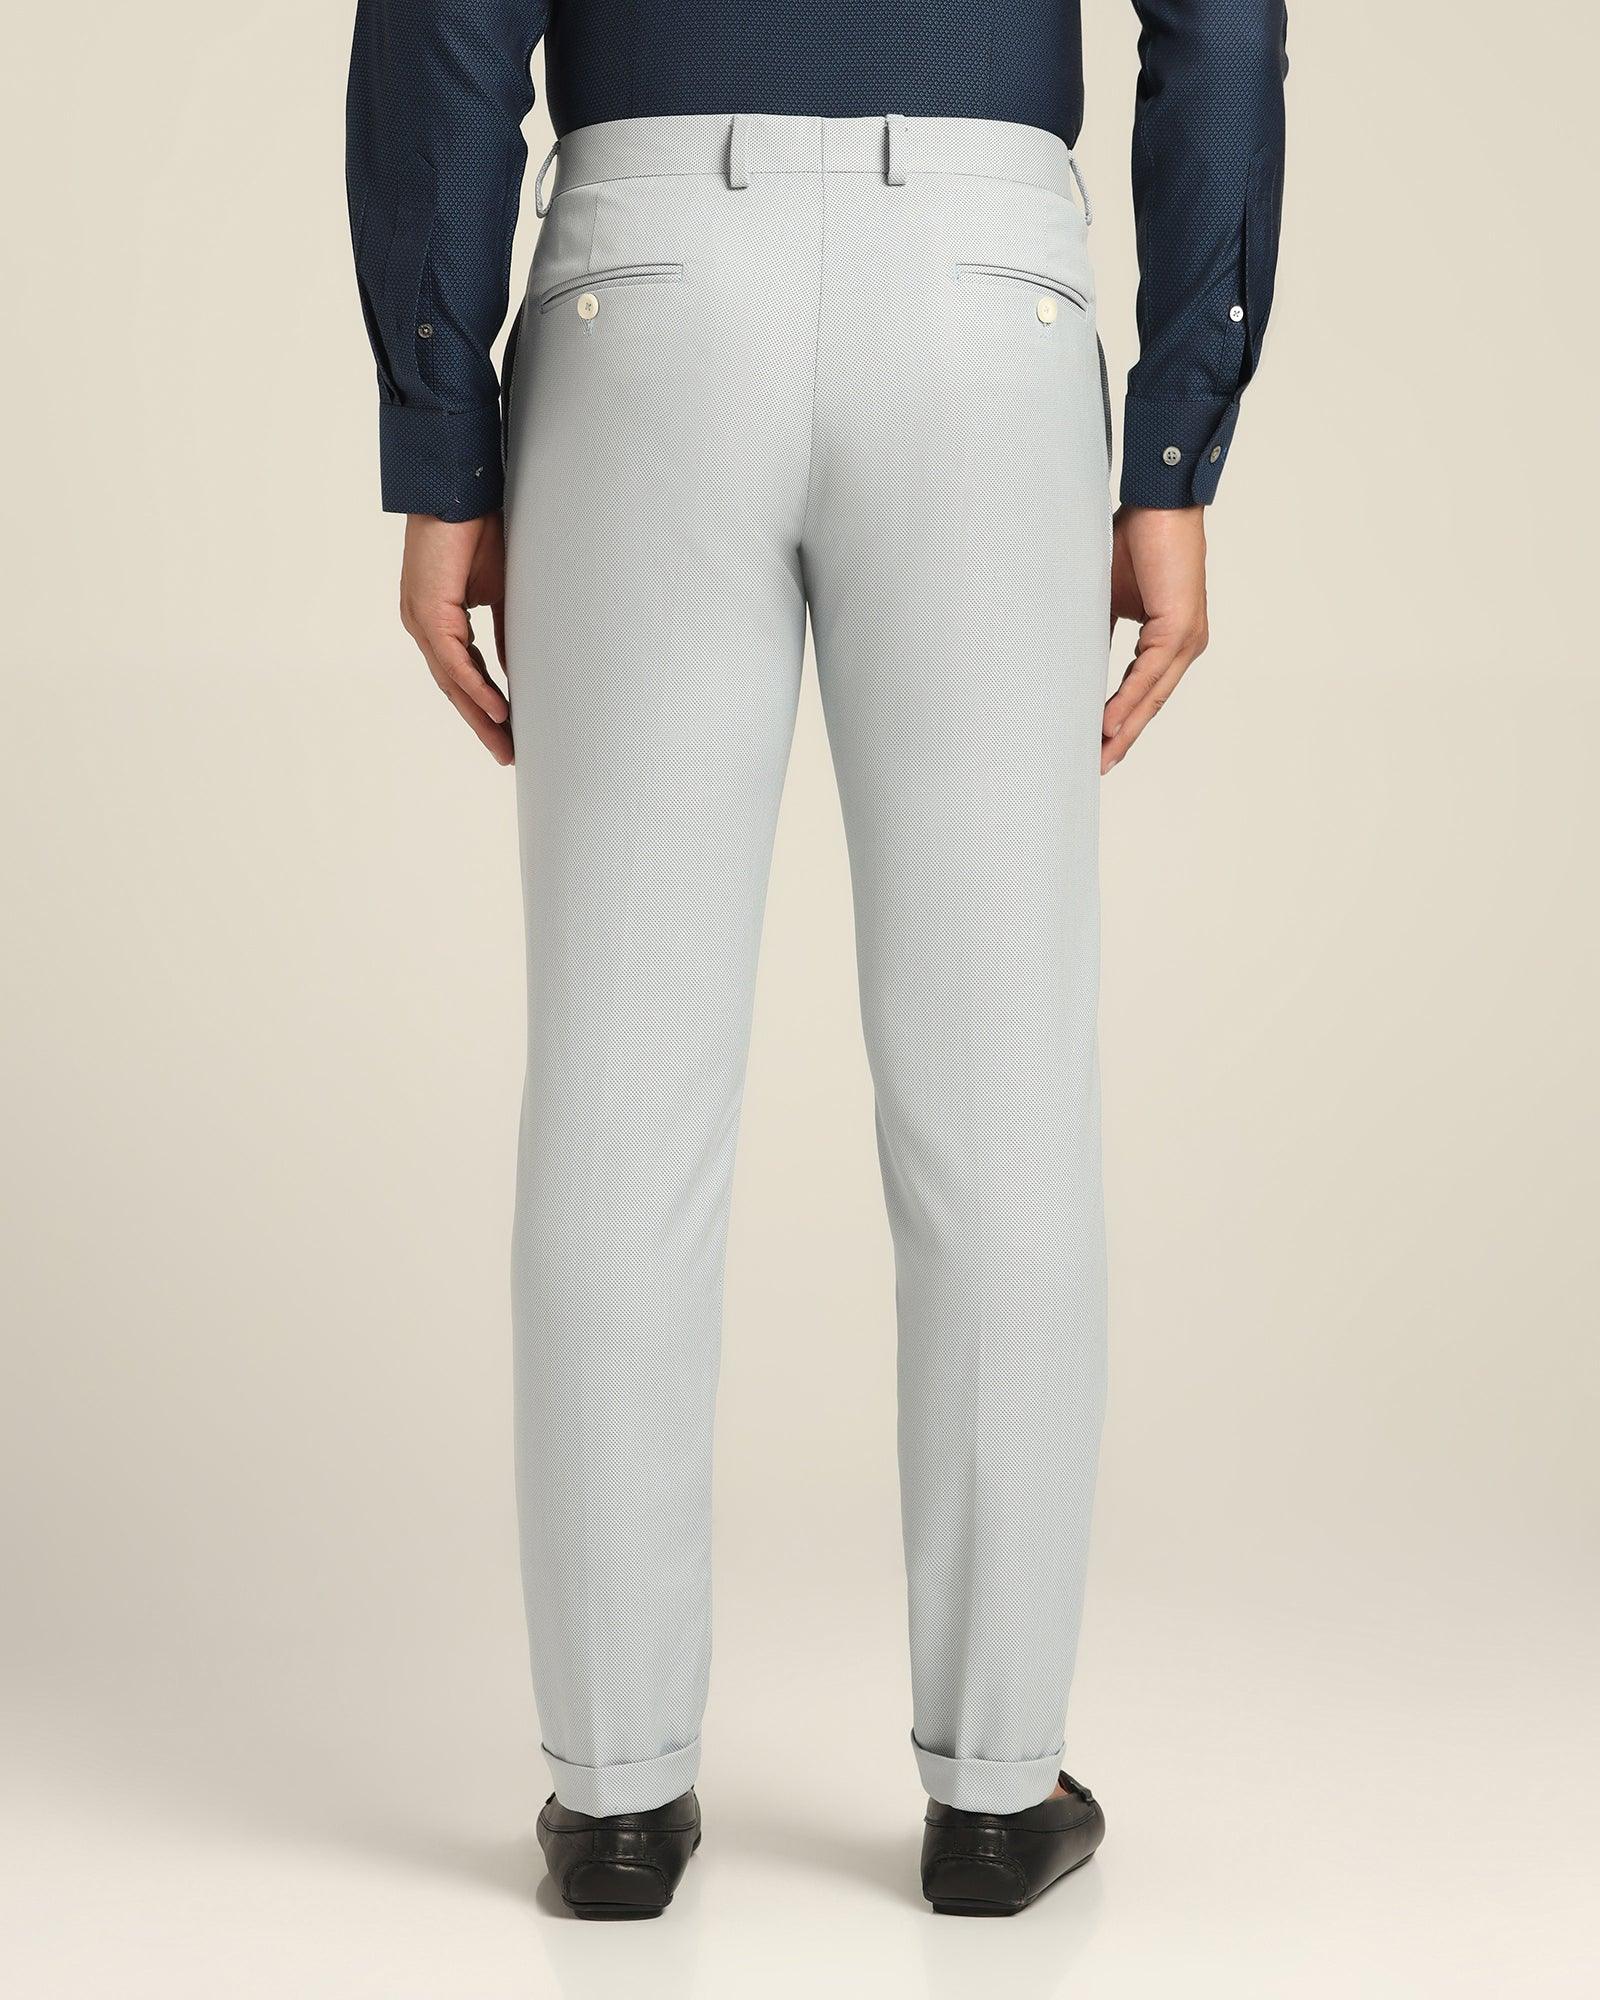 Jack & Jones Premium super slim check suit pants in blue | ASOS